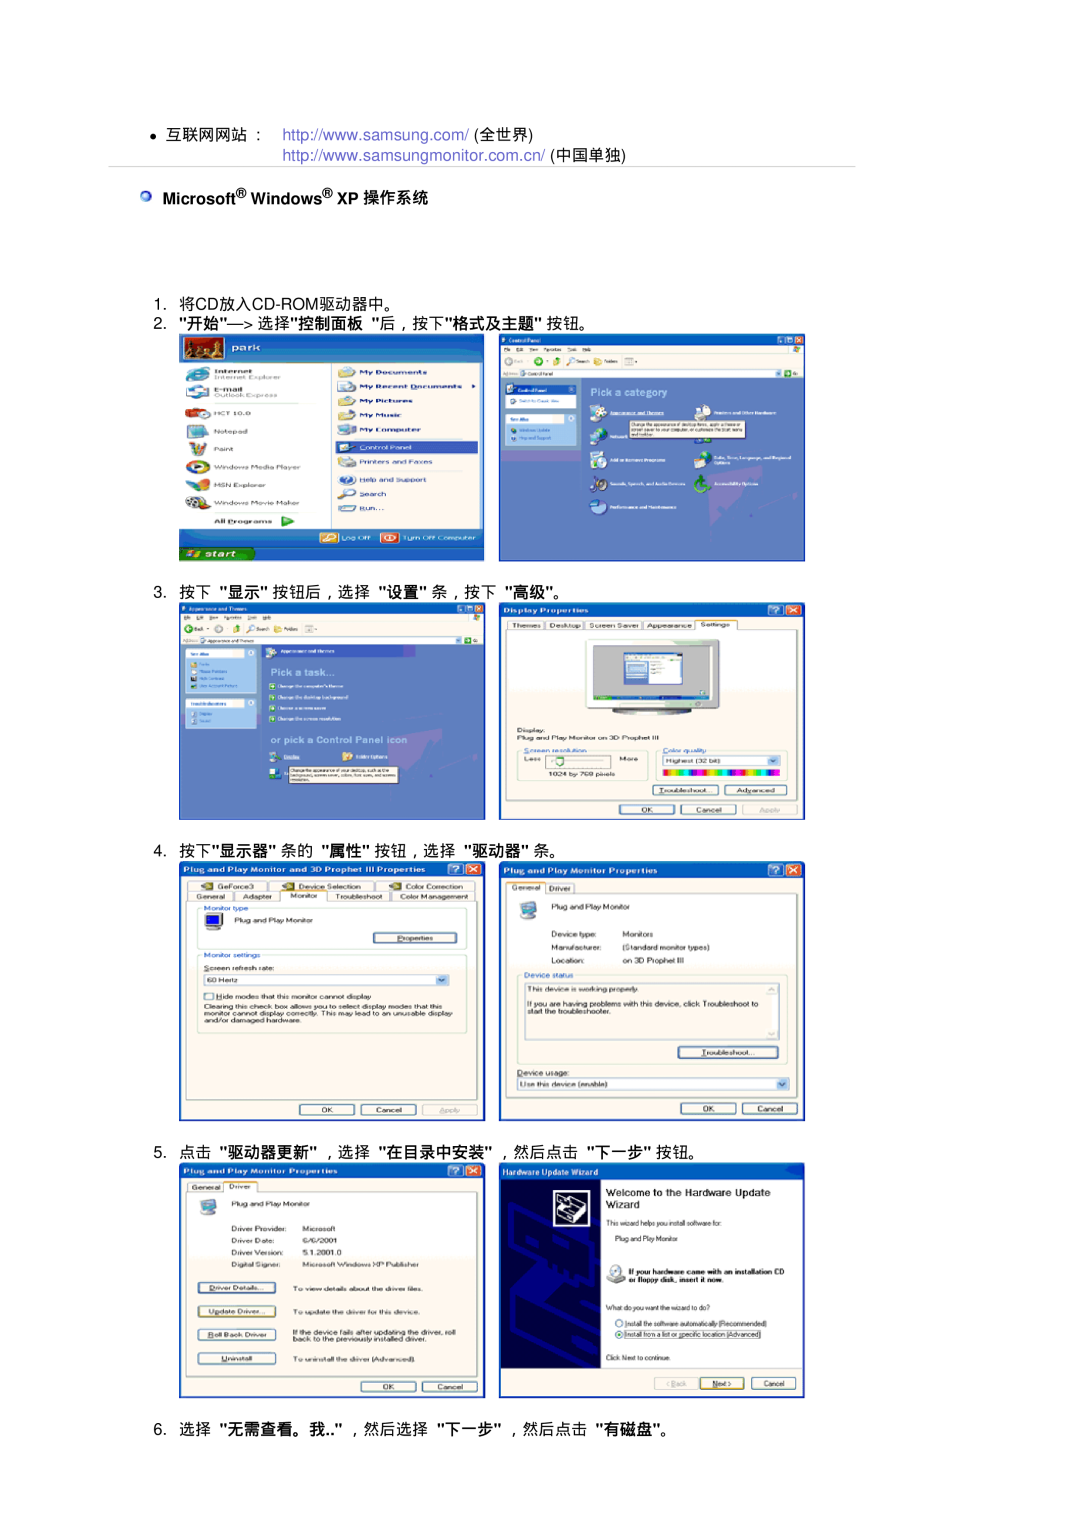 Samsung LS17HADKSX/EDC manual Microsoft Windows XP 操作系统, 2. 开始- 选择控制面板 后，按下格式及主题 按钮。, 5. 点击 驱动器更新 ，选择 在目录中安装 ，然后点击 下一步 按钮。 